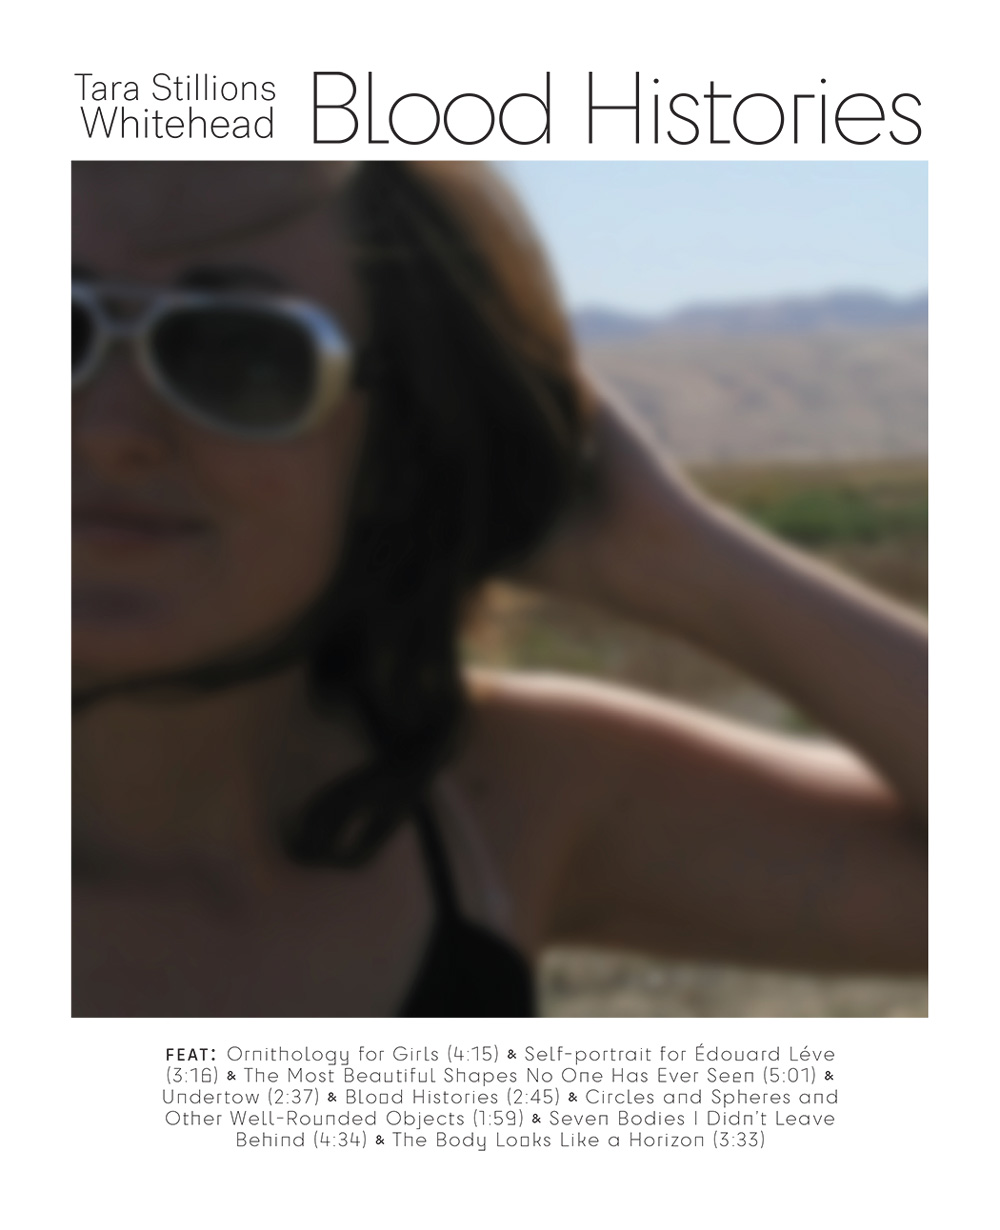 Blood Histories, by Tara Stillions Whitehead